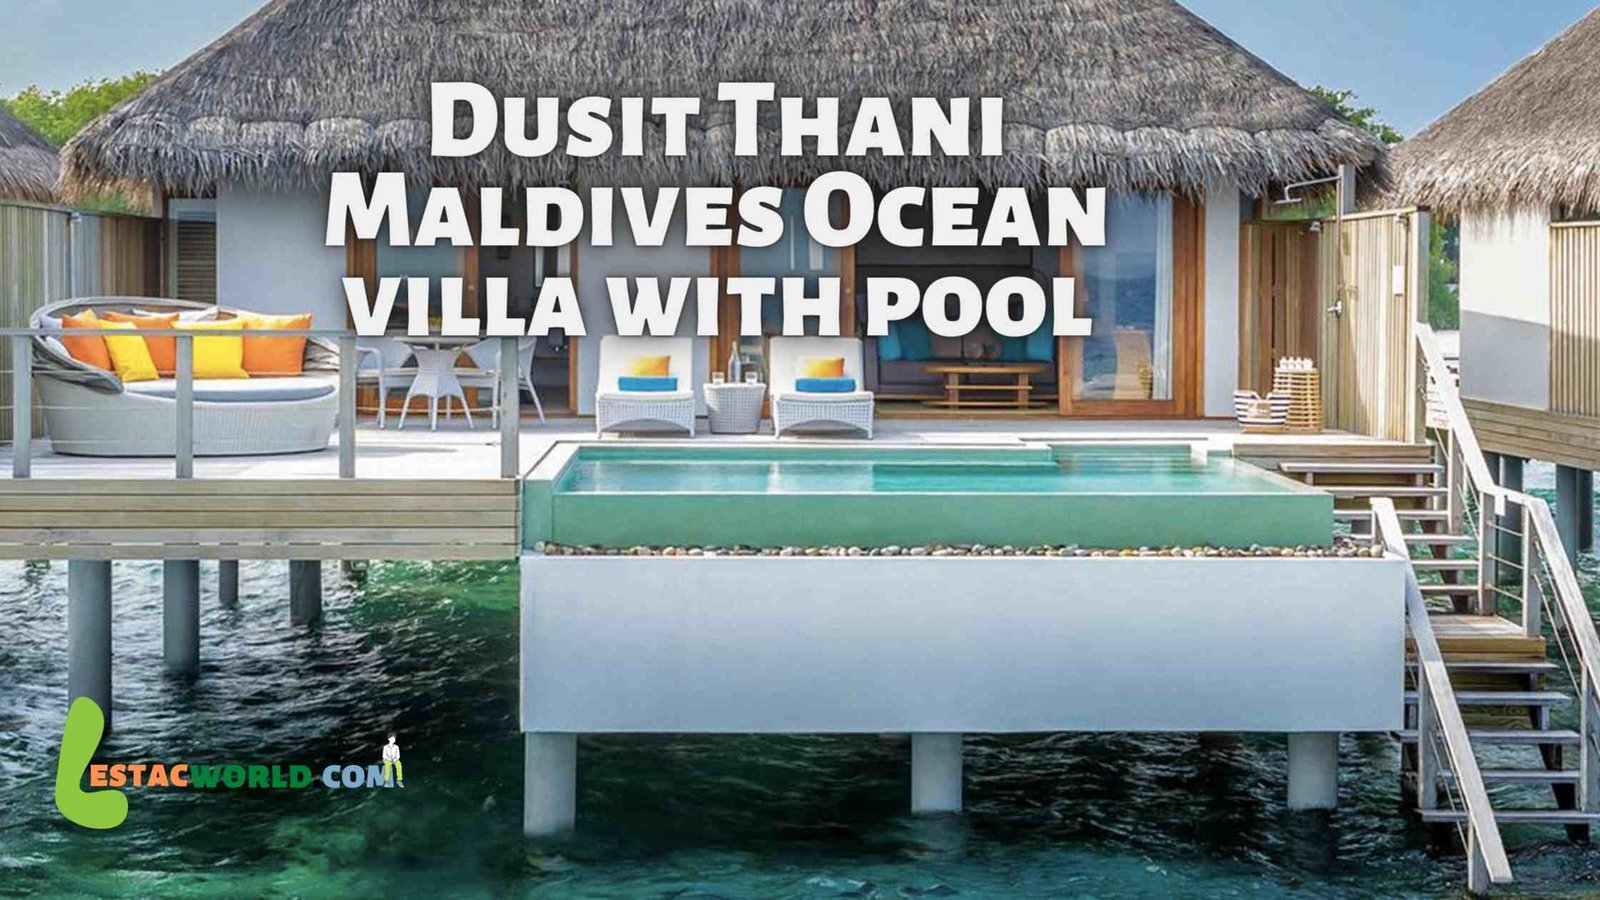 Dusit Thani Maldives Ocean villa with pool